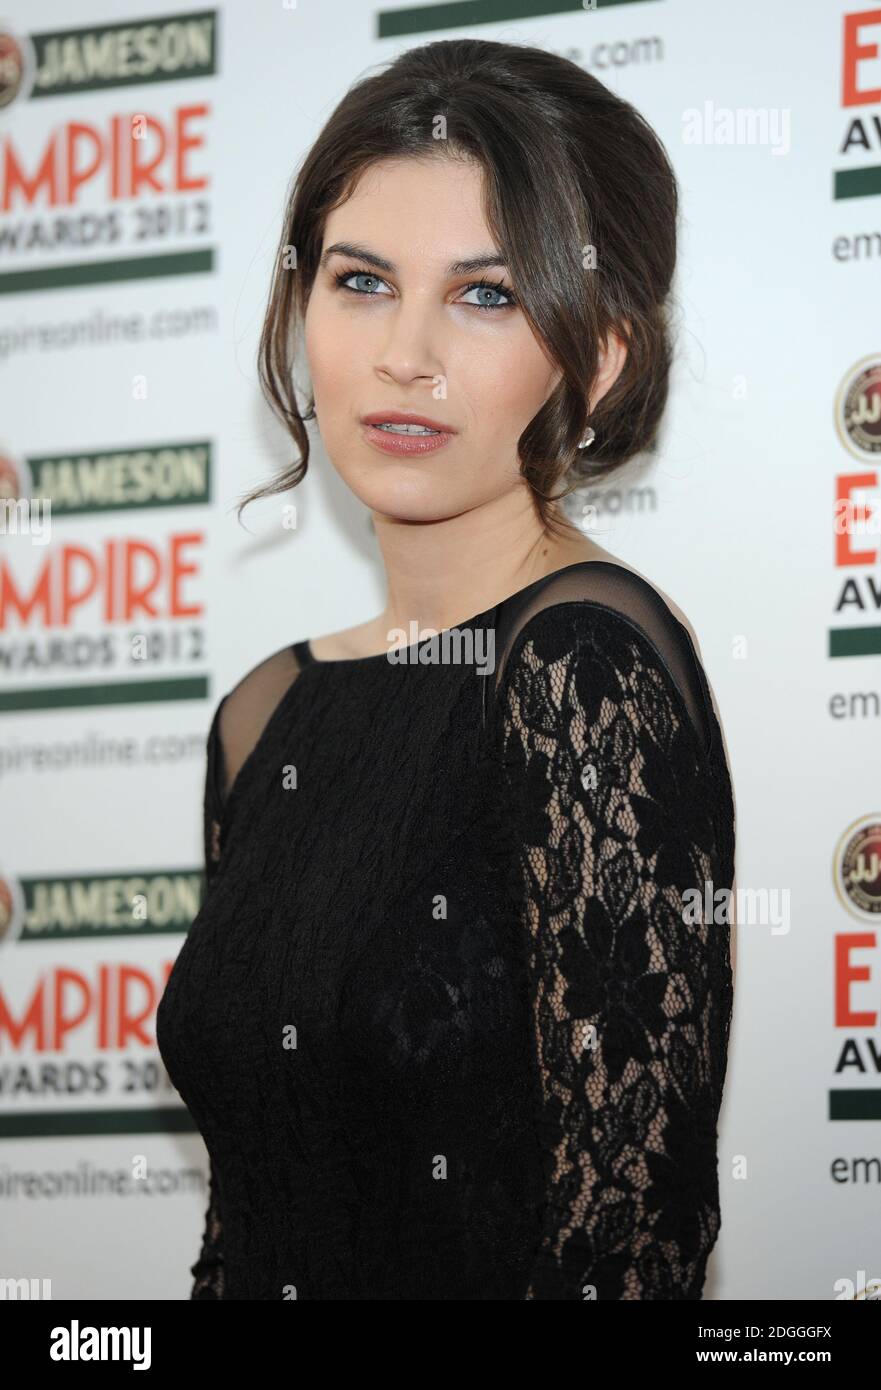 Ornela Vistica at The Jameson Empire Film Awards 2012, Grosvenor House Hotel, London. Stock Photo